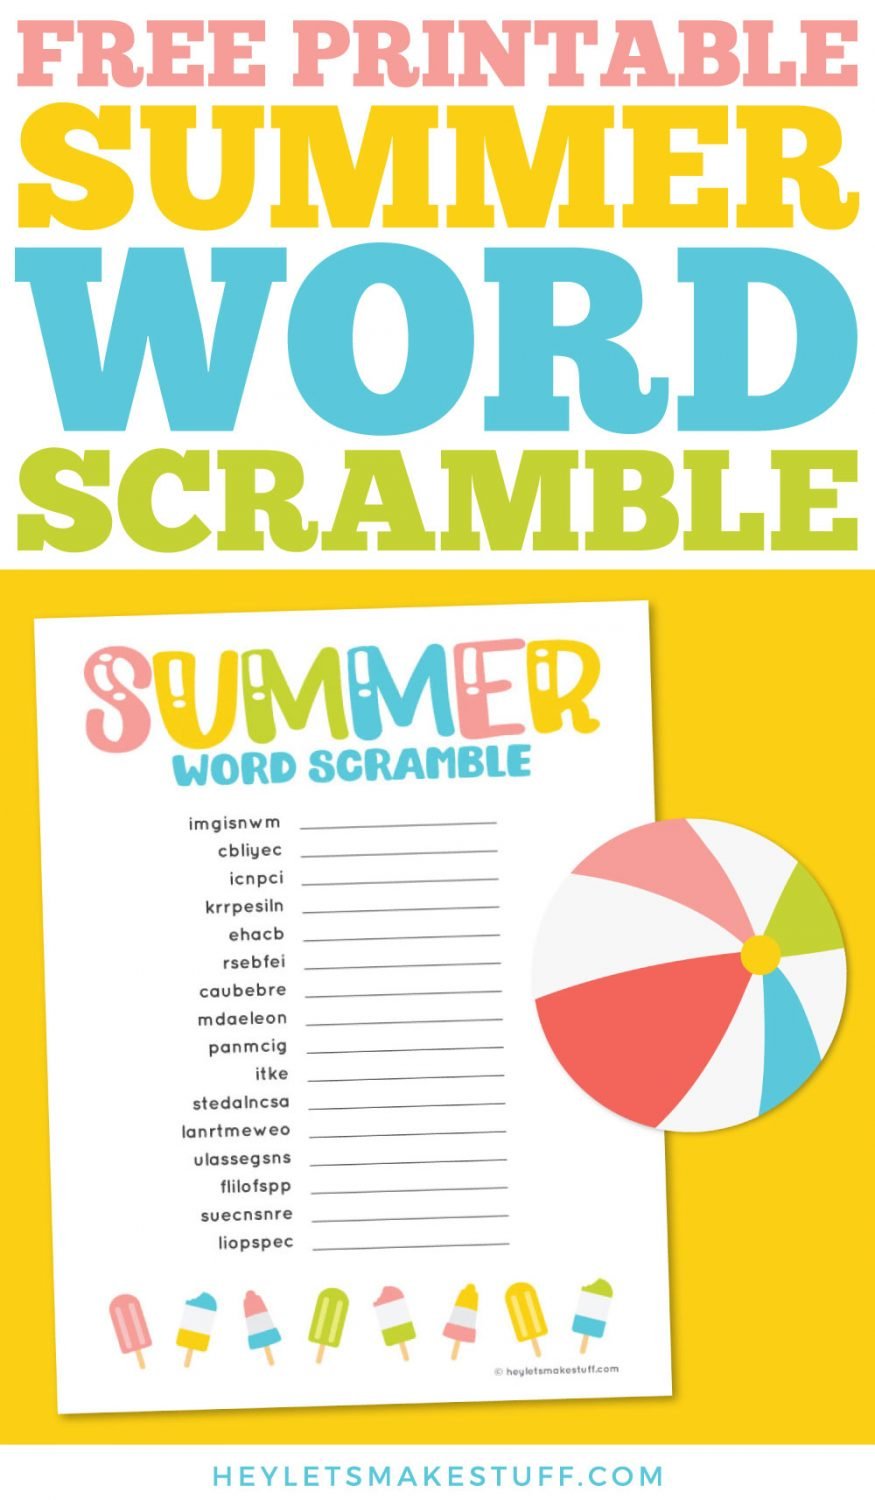 Free printable summer word scramble pin image